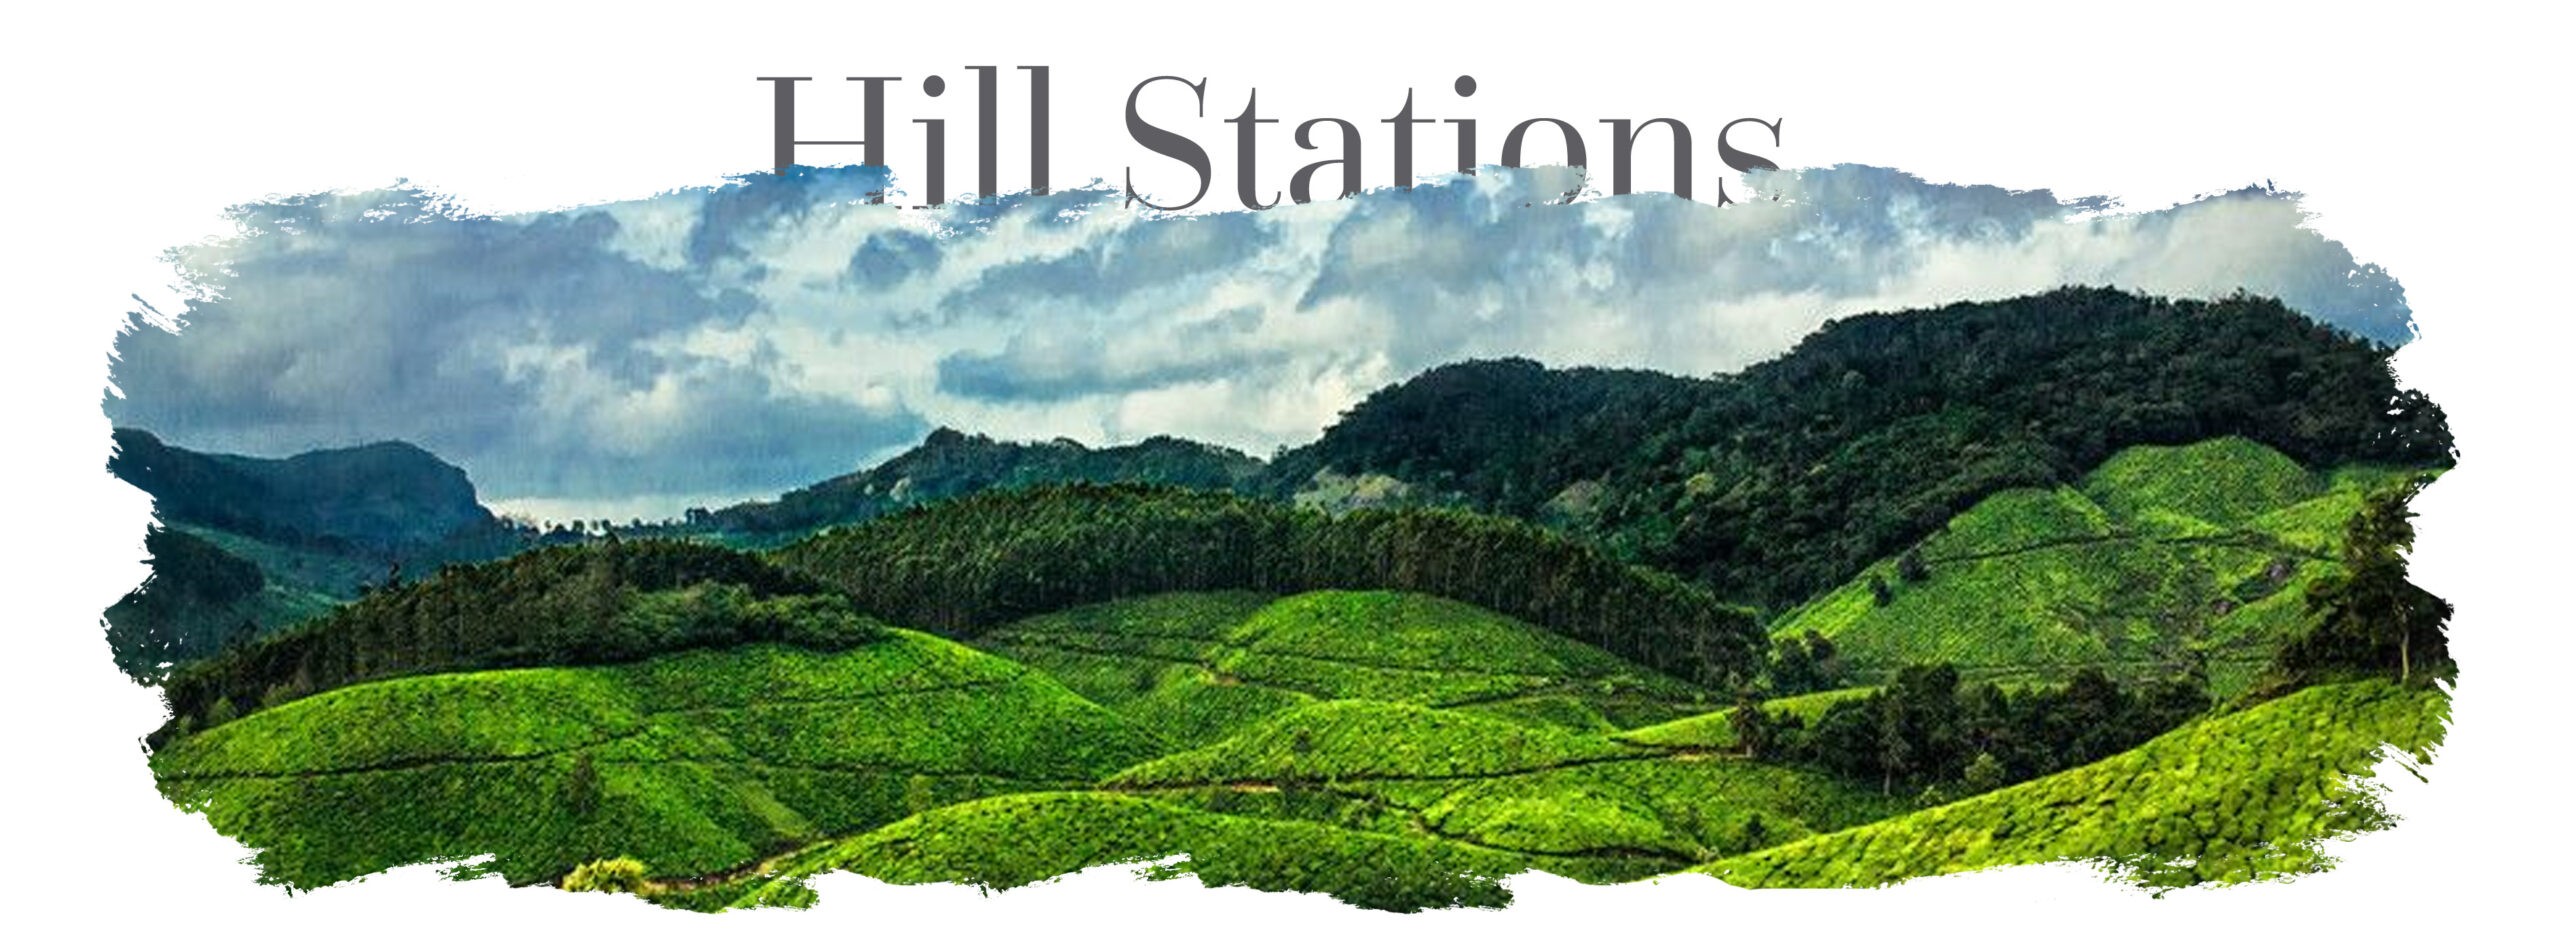 Hill station